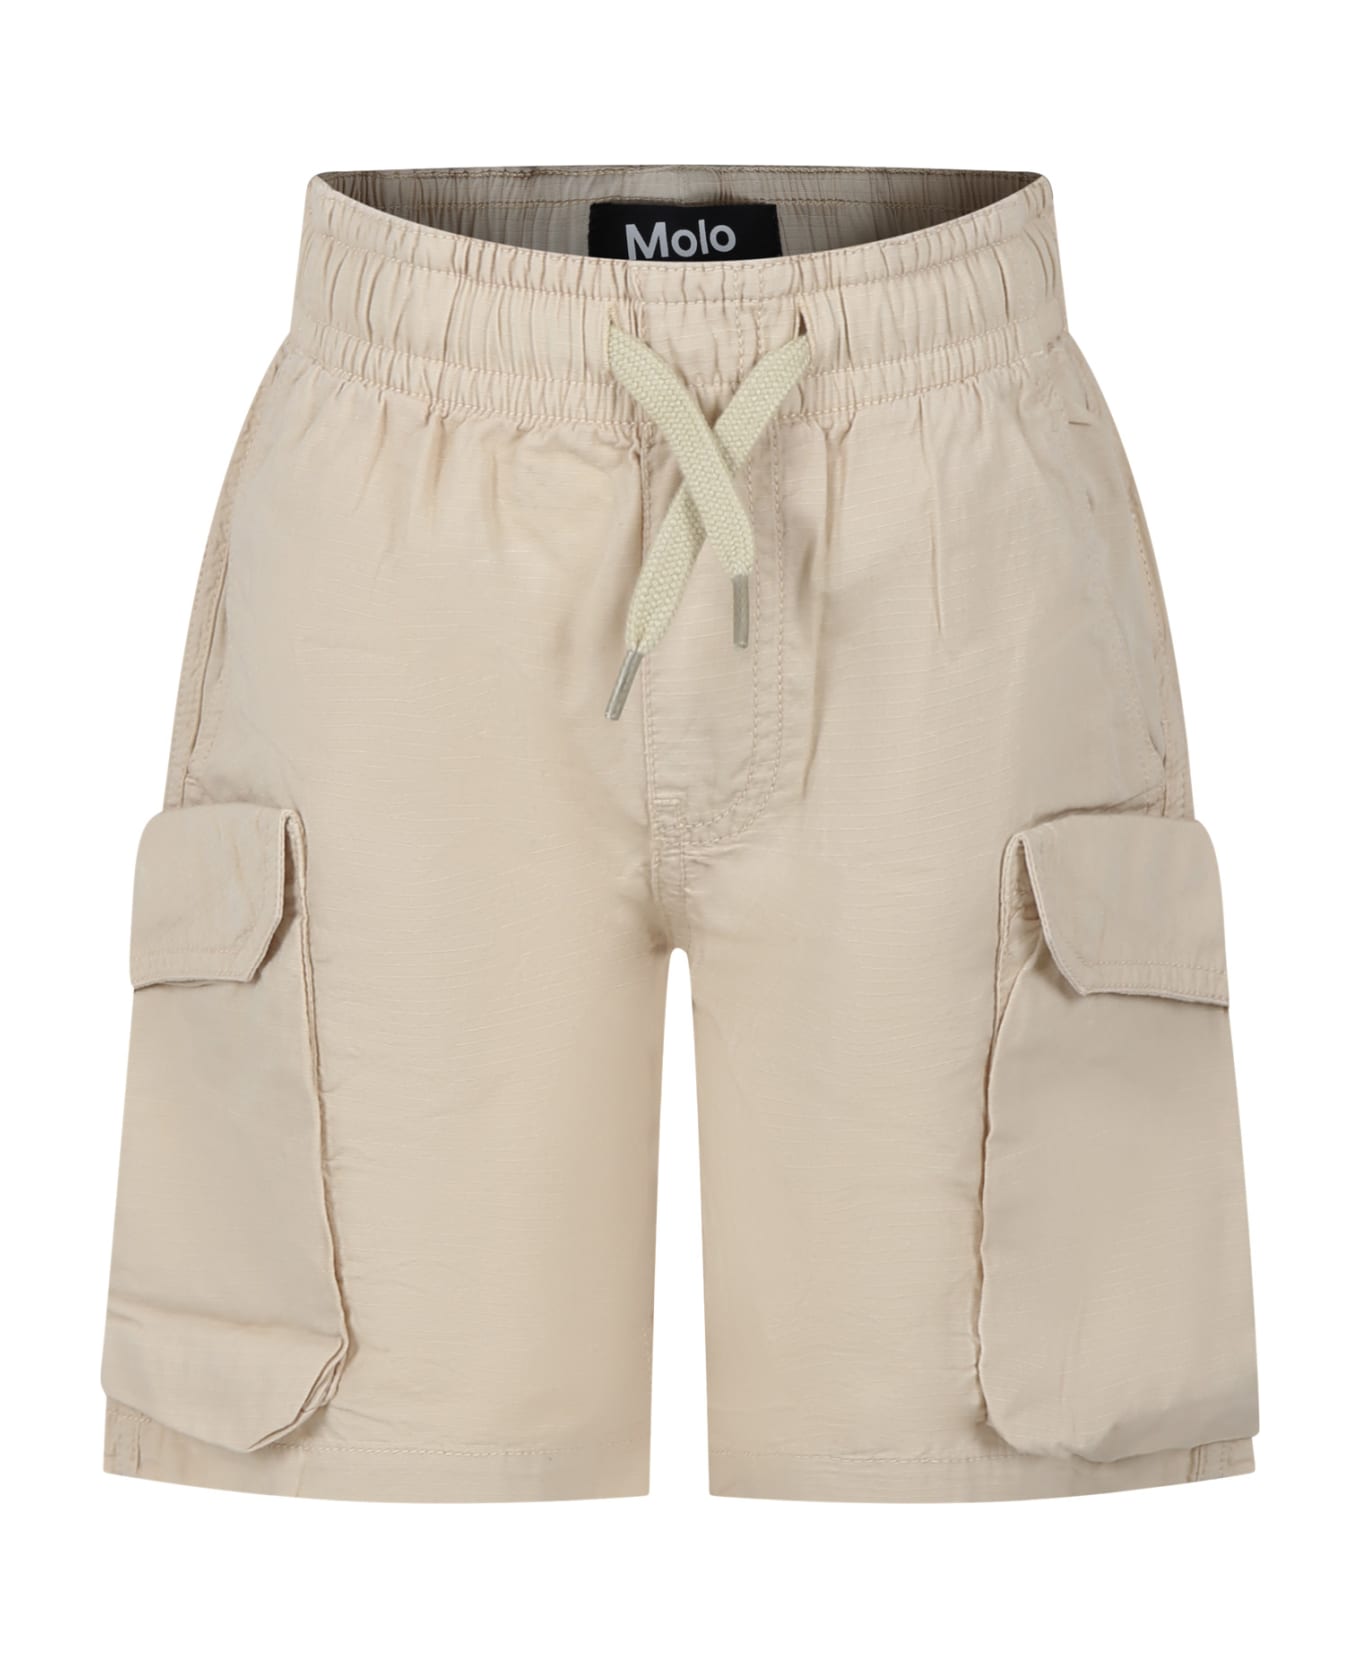 Molo Casual Argod Ivory Shorts For Boy - Ivory